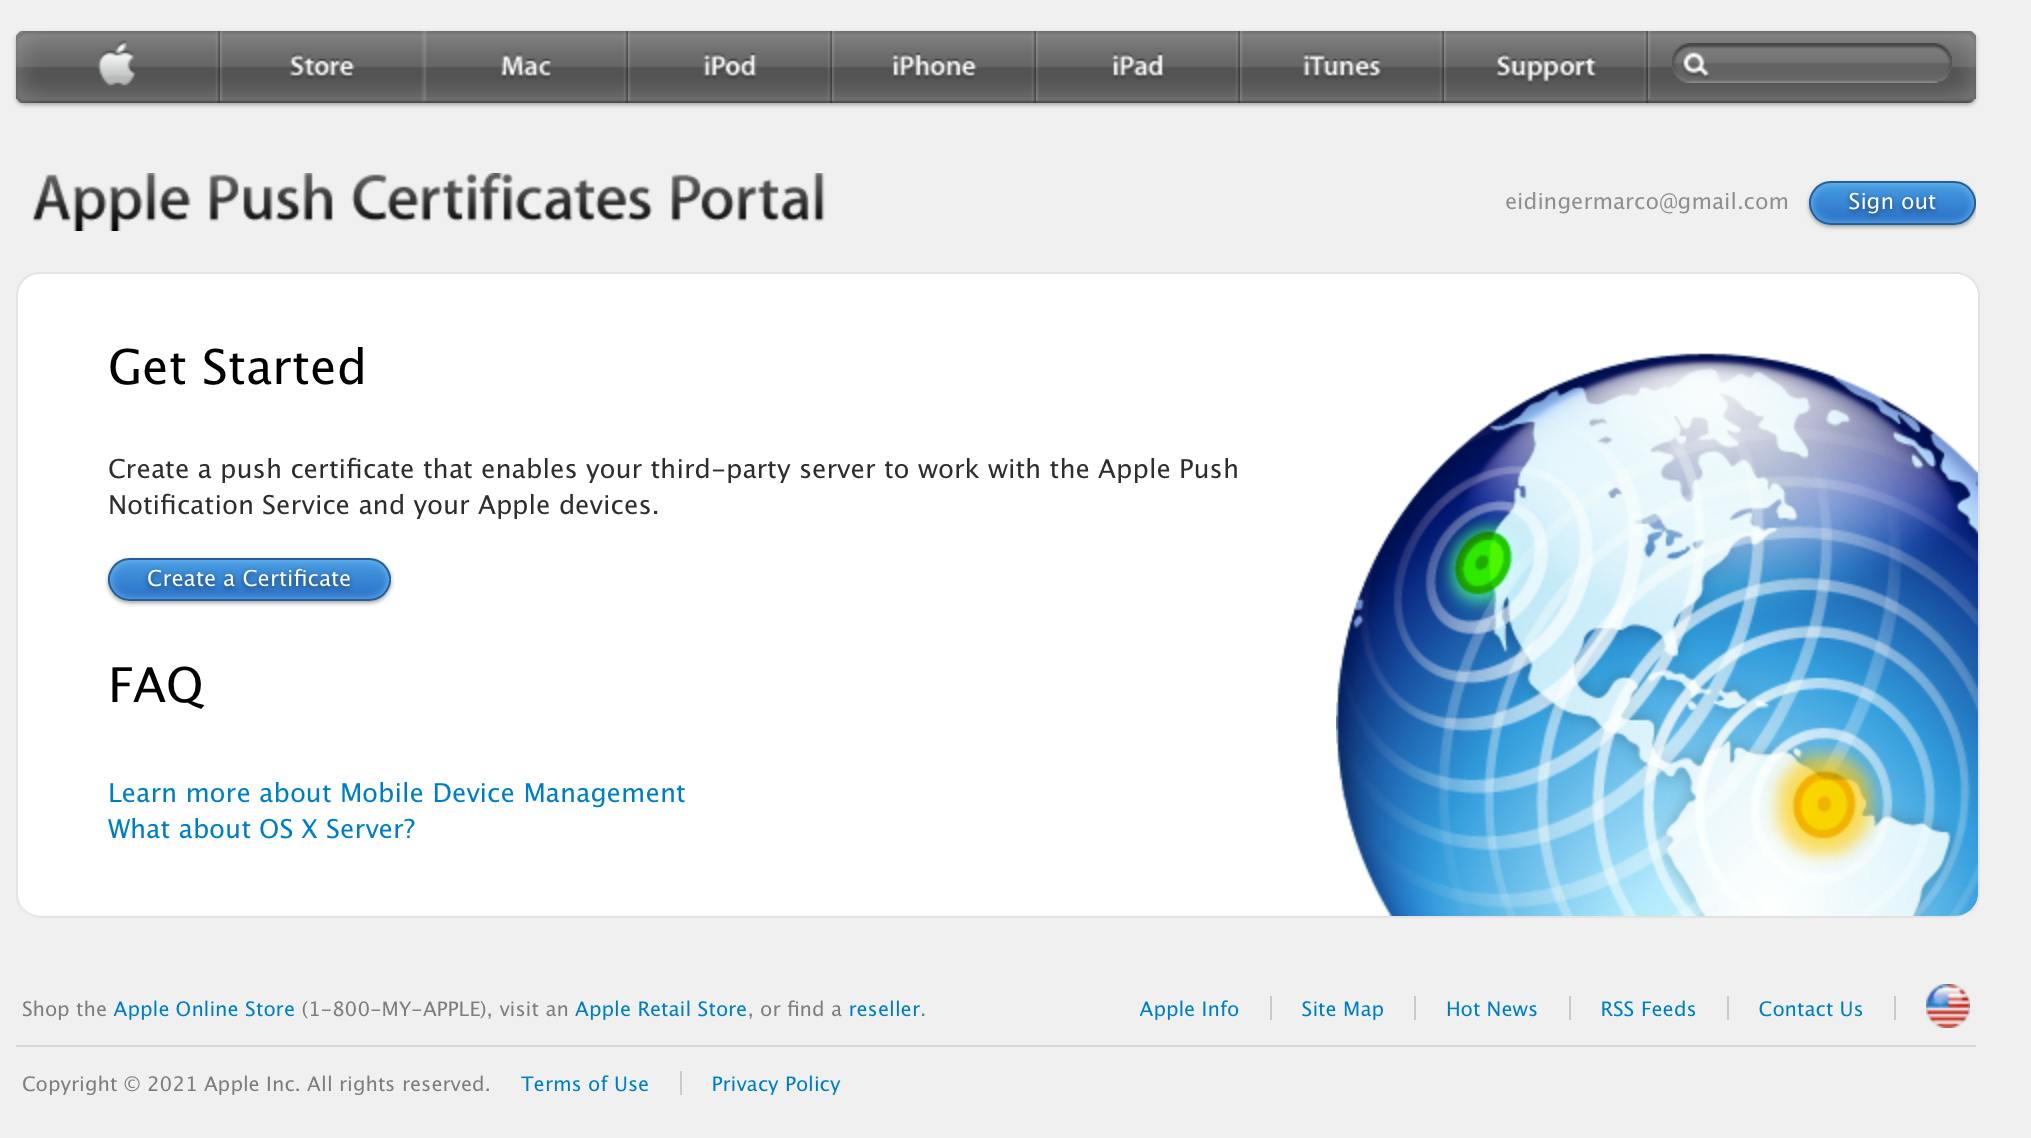 Apple Push Certificate Portal - Get Started